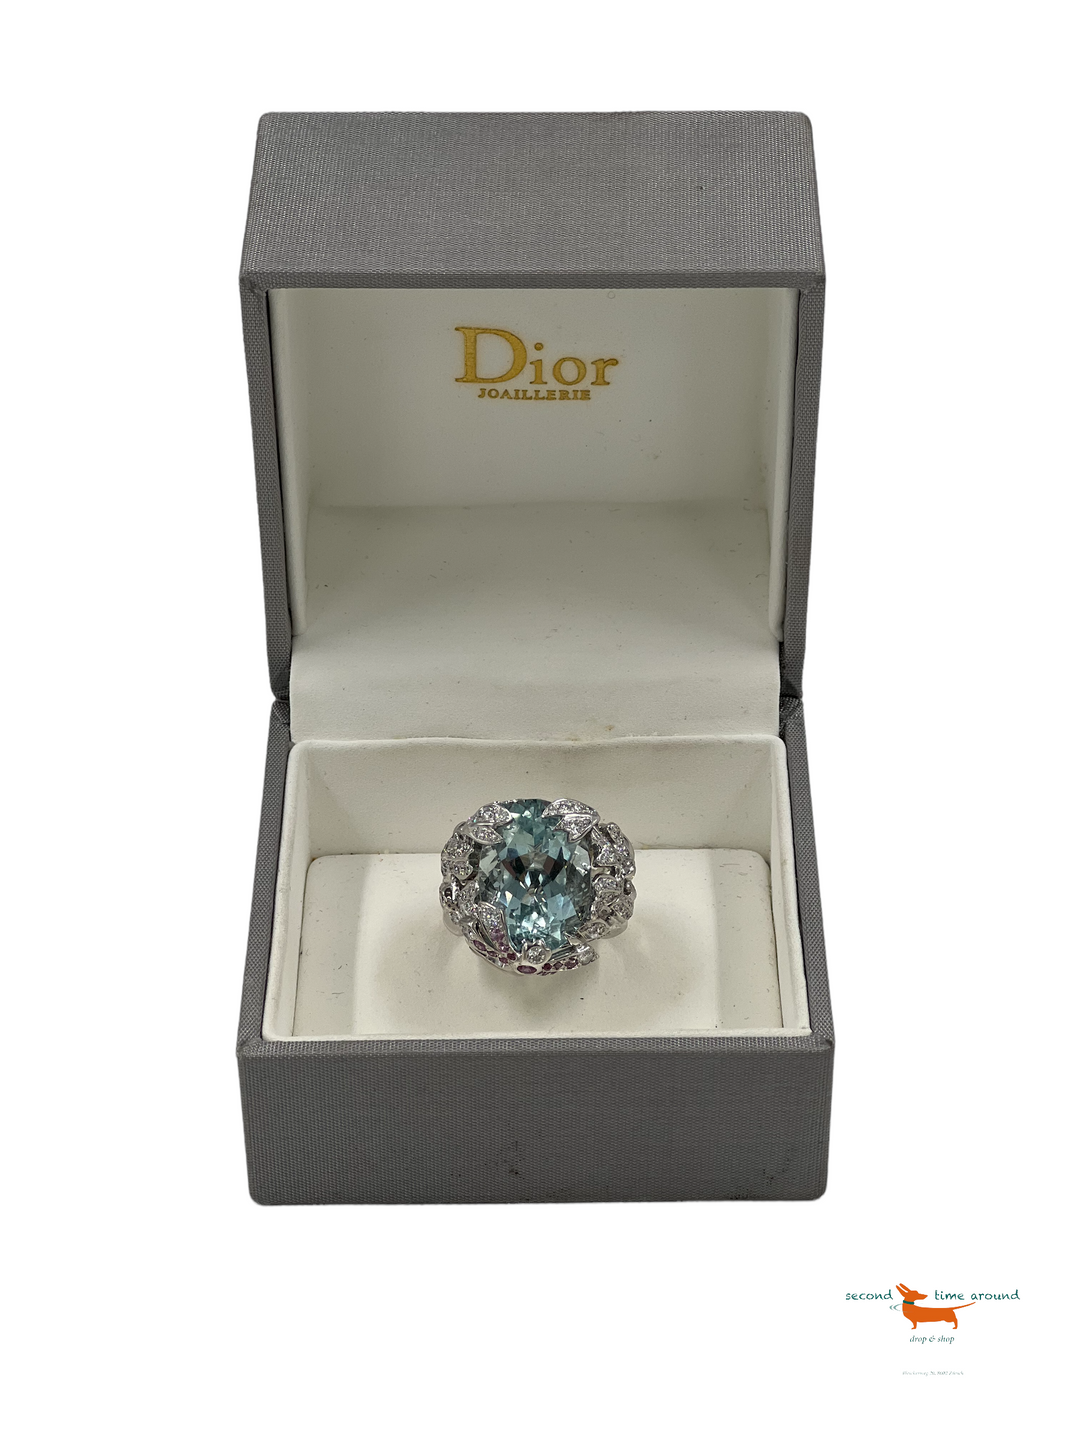 Christian Dior Moyenne Joaillerie Ring Gourmande Pastel 18K White Gold